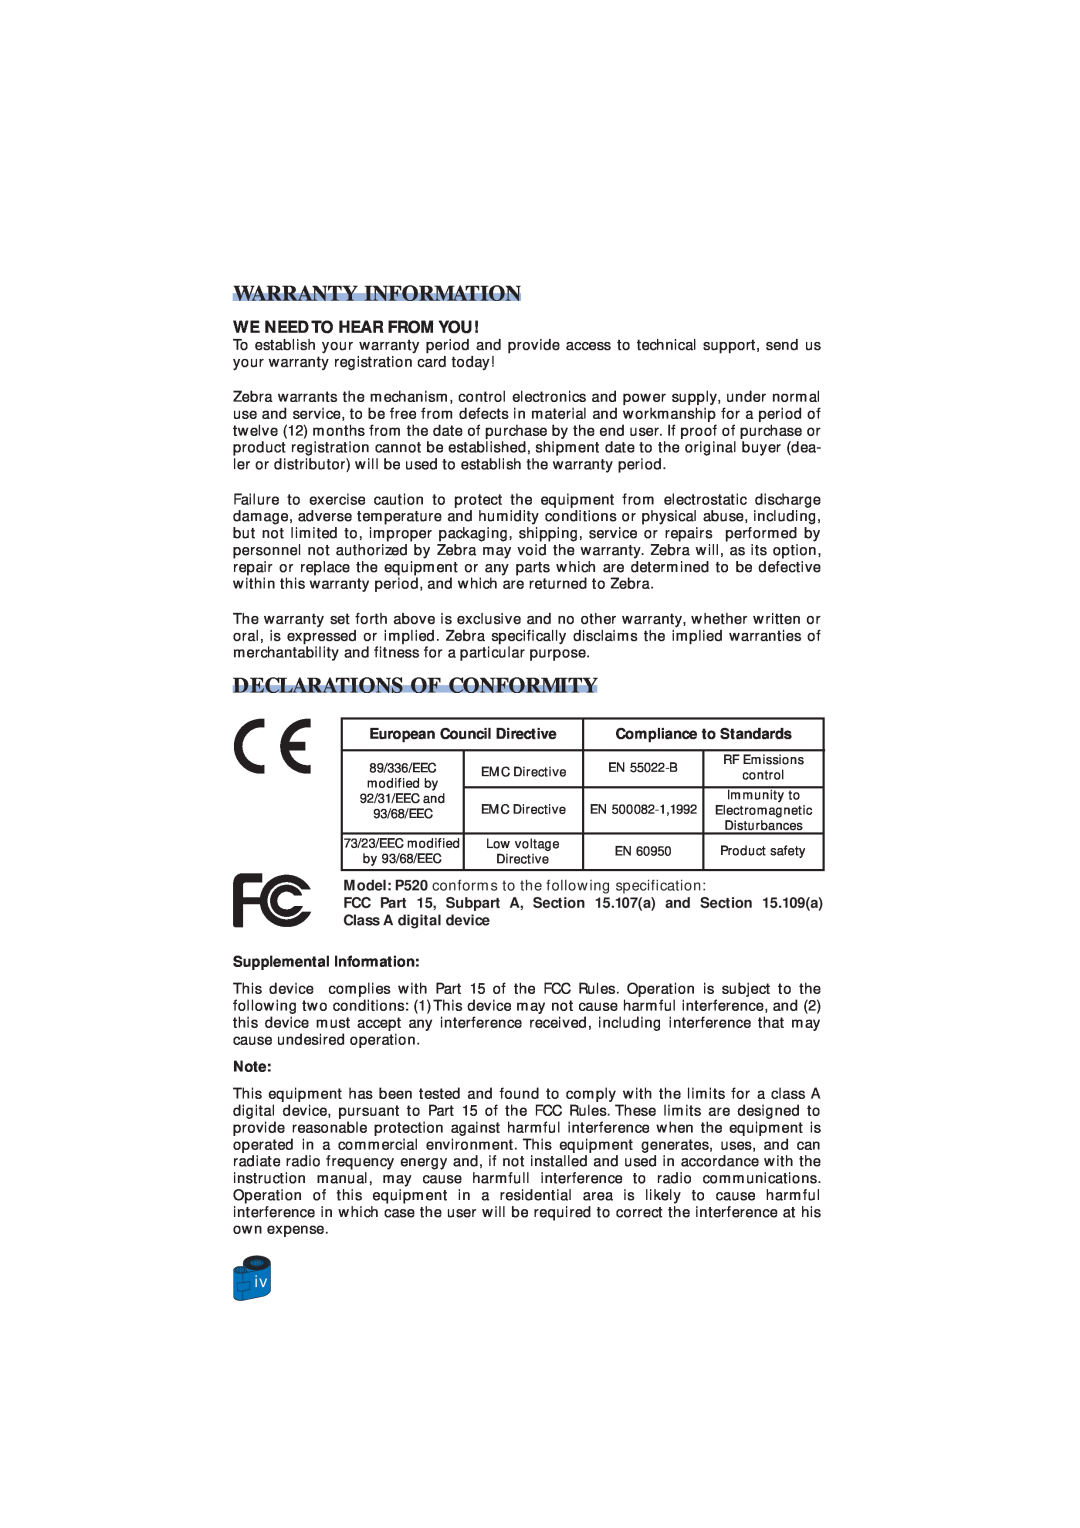 Zebra Technologies P520 user manual Warranty Information, Declarations Of Conformity, European Council Directive 